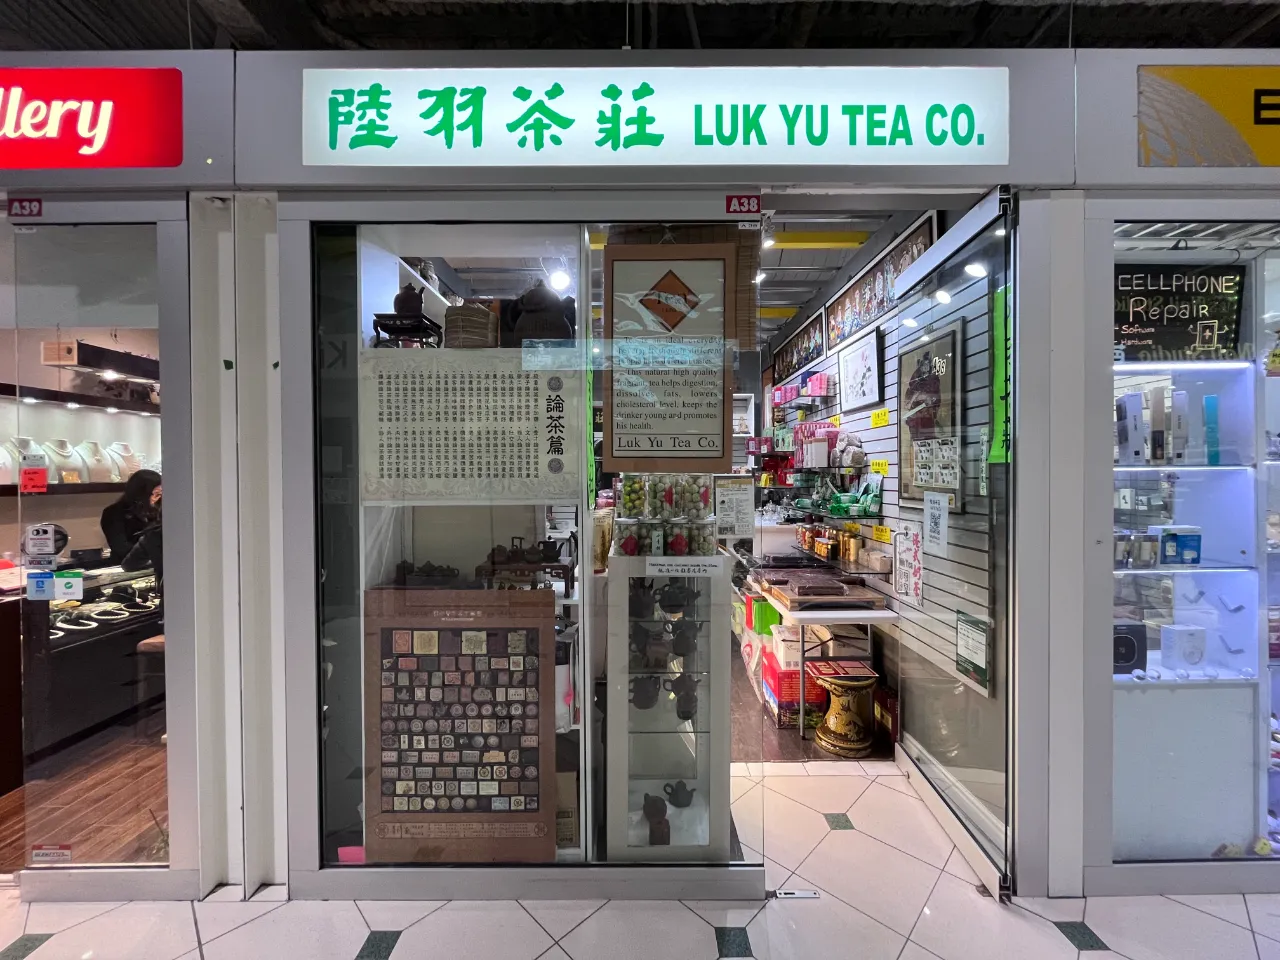 Luk Yu Tea Co